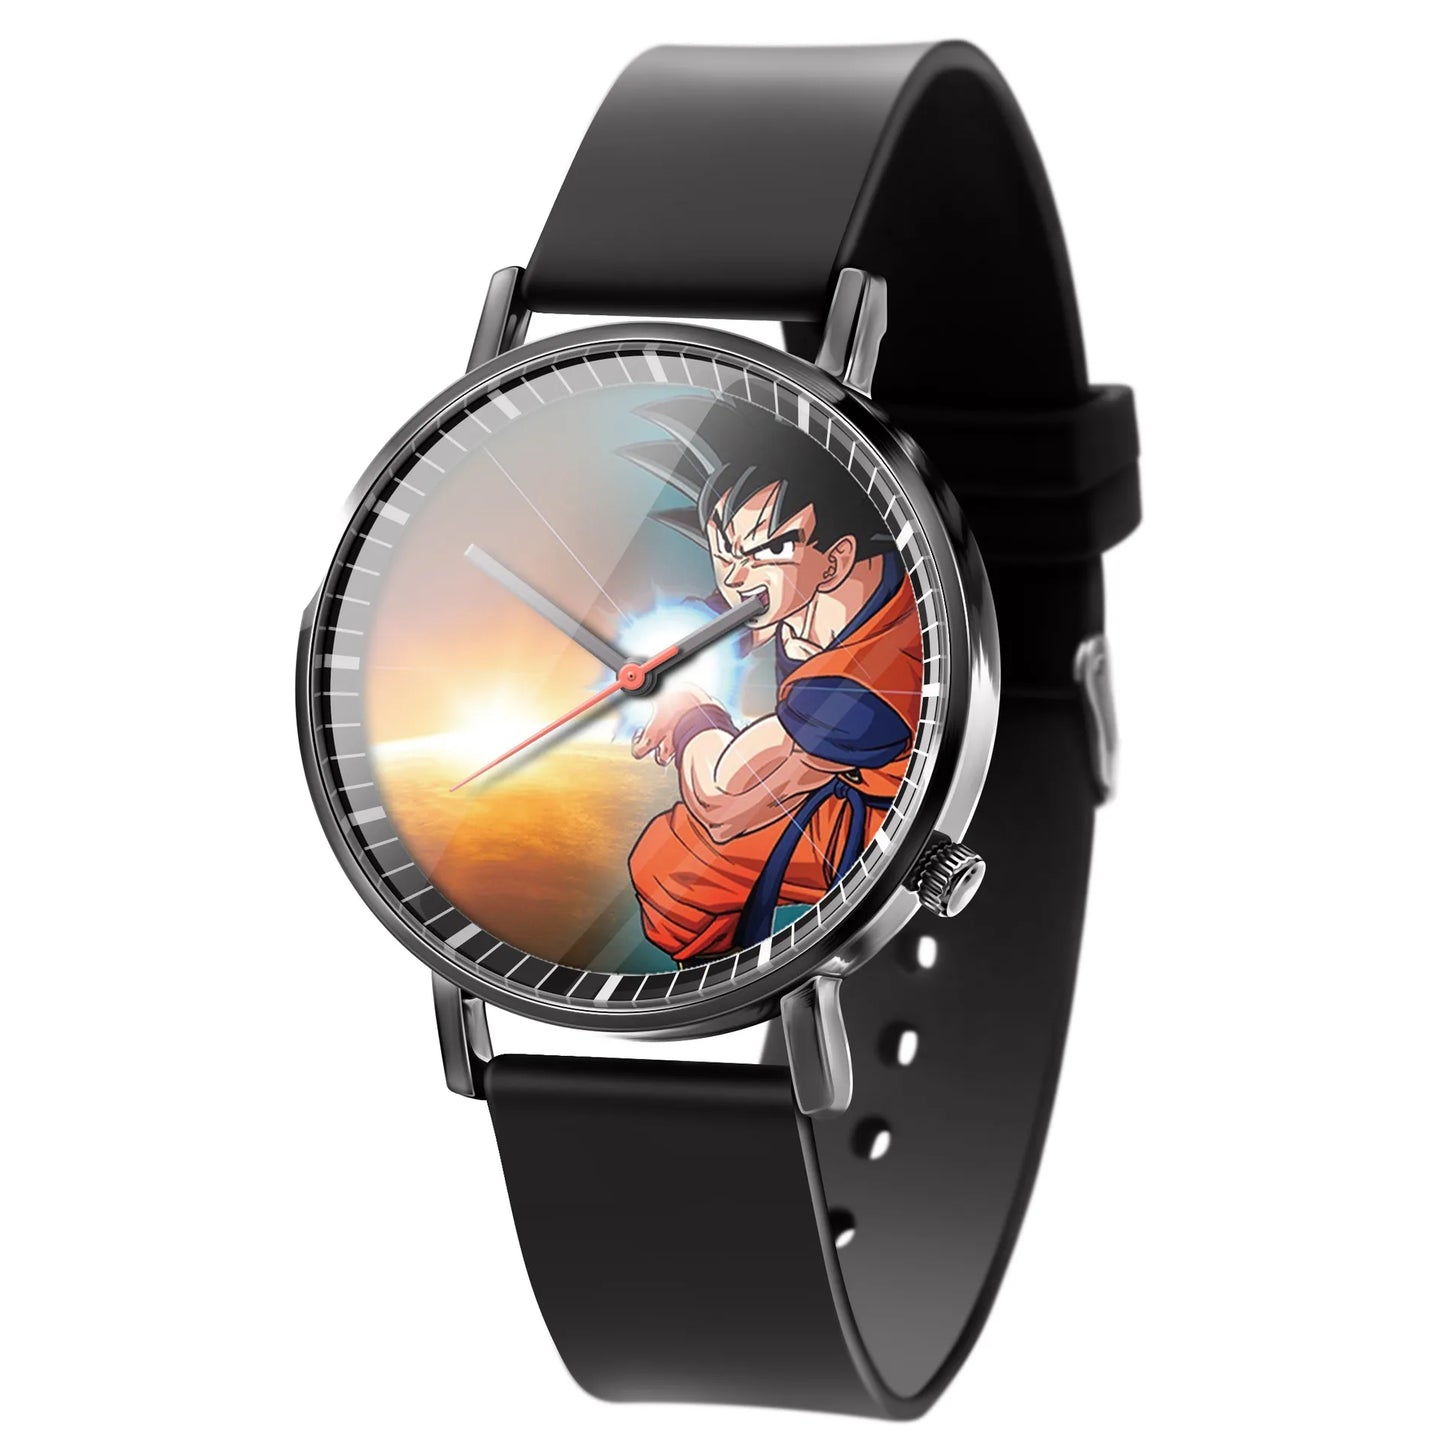 Dragon Ball Z Watch Goku Saiyans Wristwatch Leather Printing Watch Cartoon Anime Quartz Electronic Watch Toy Birthday Party Gift-Dragon ball-6-